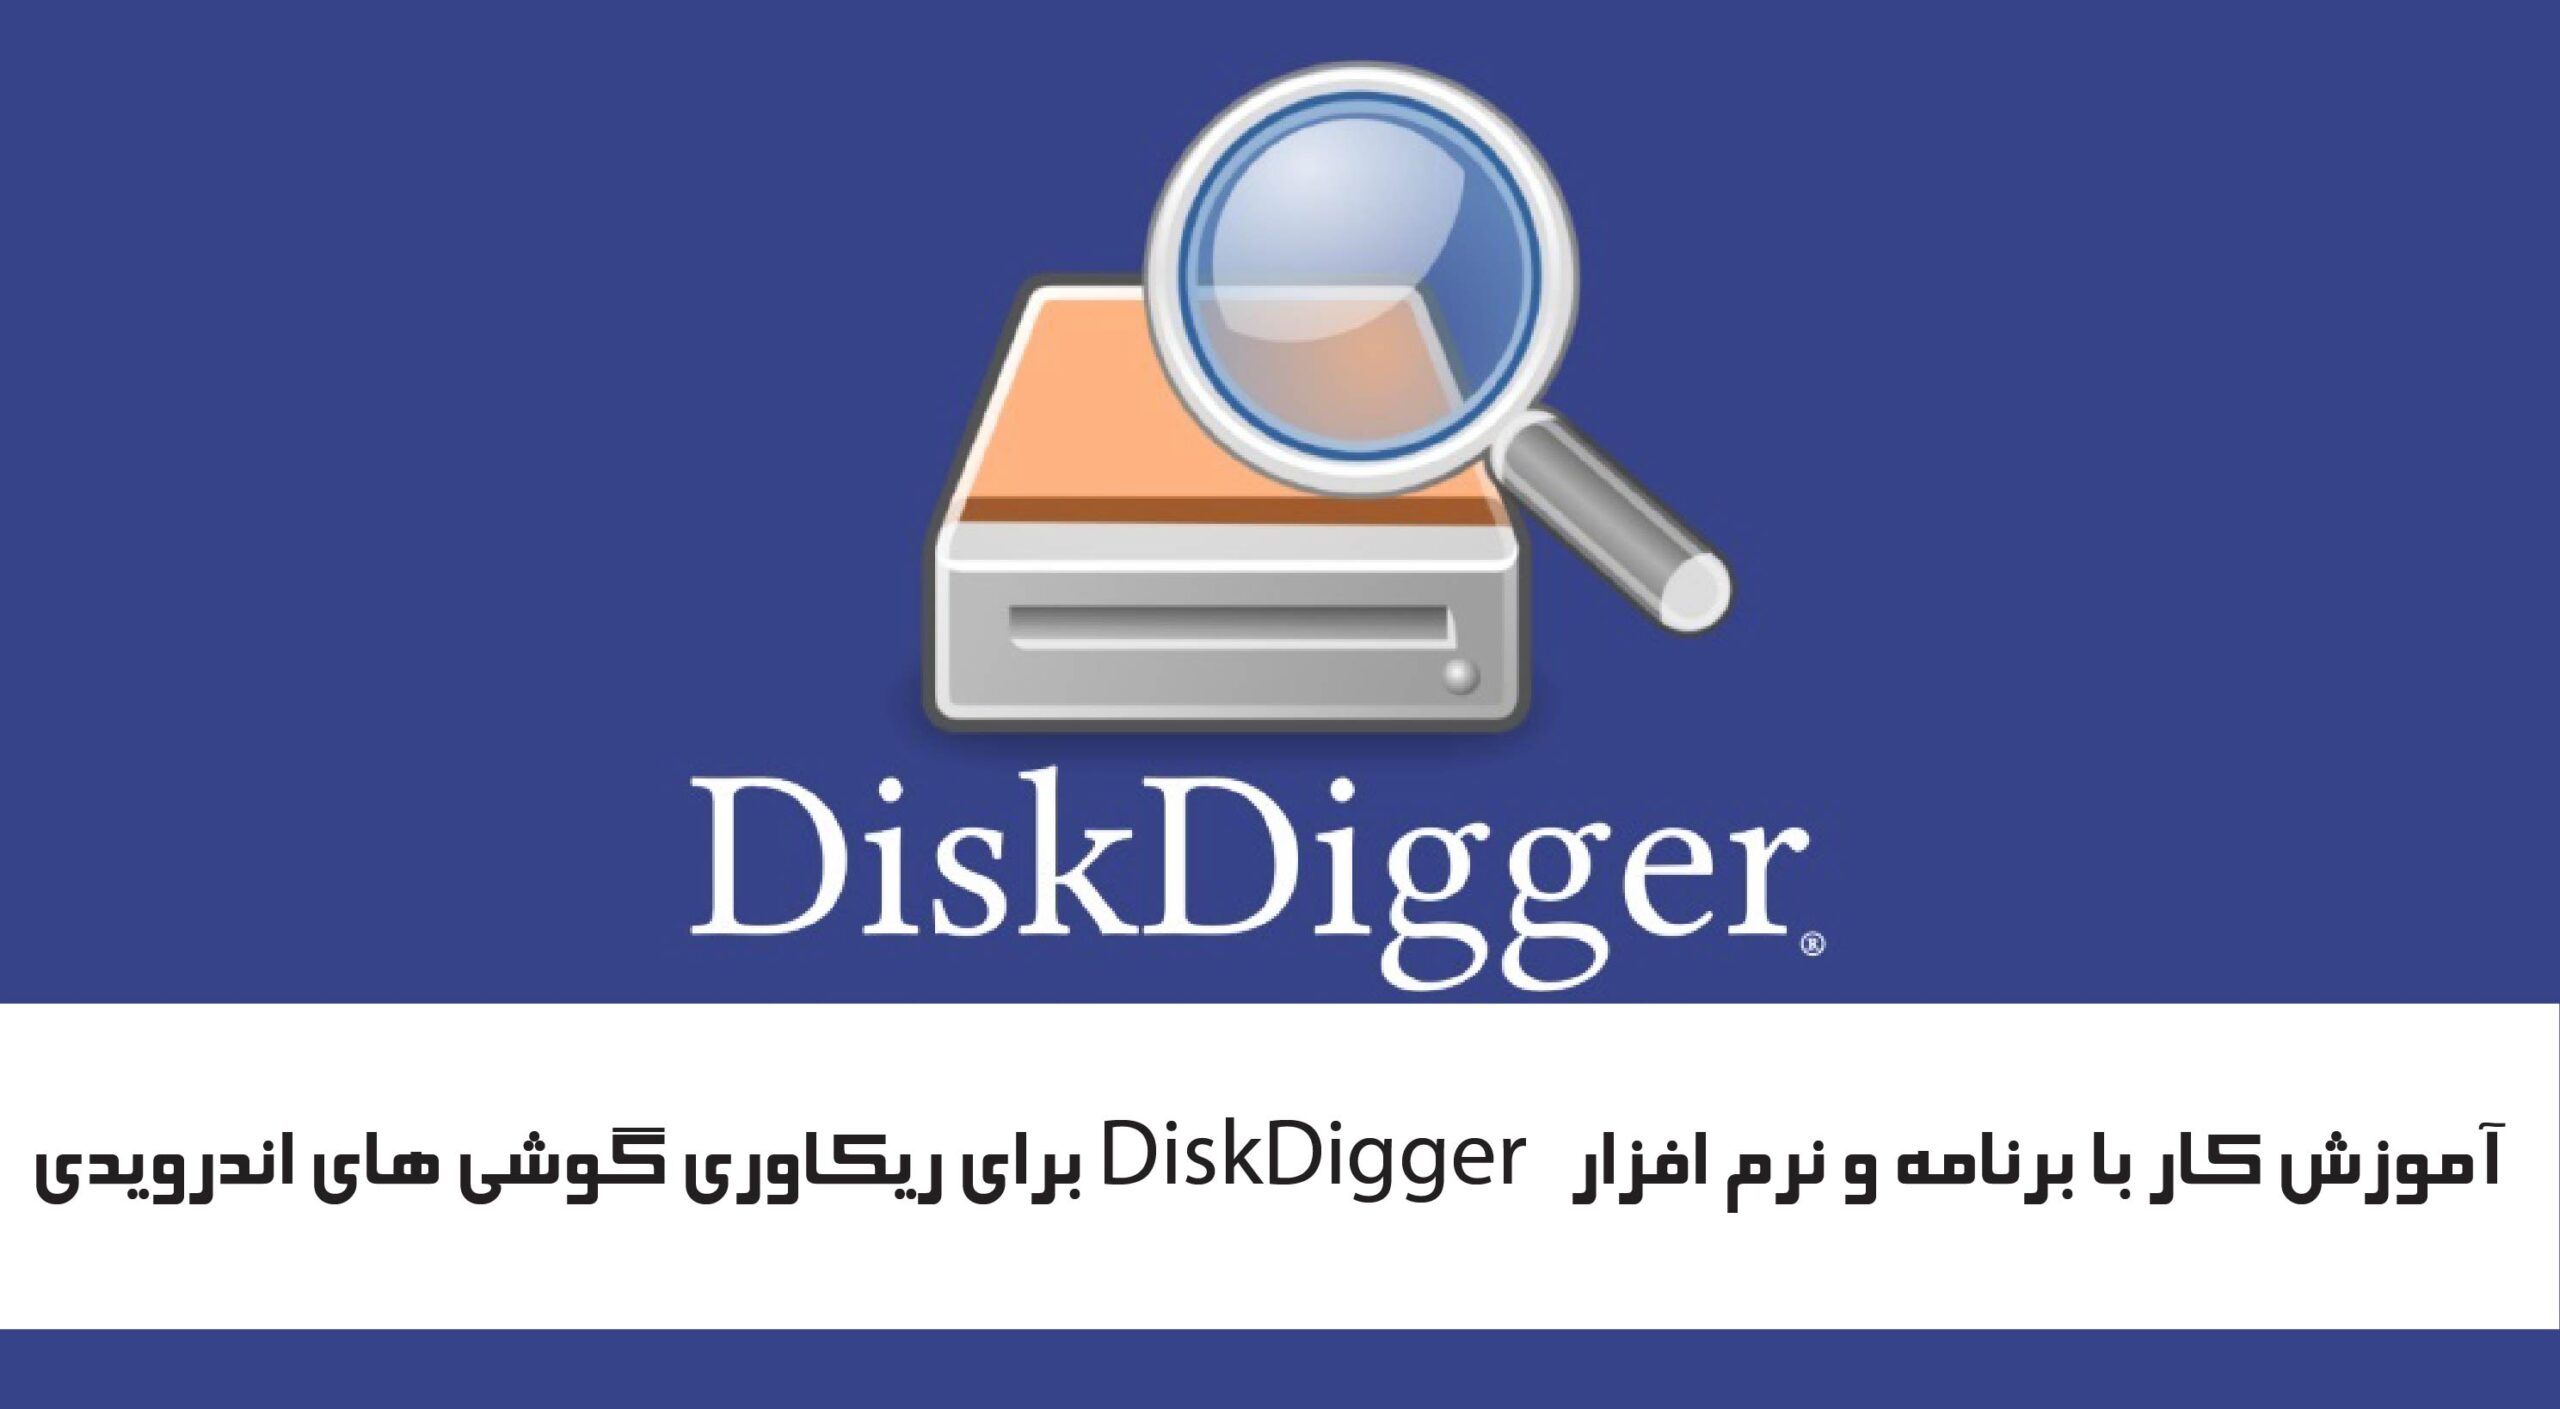 diskdigger app download apk